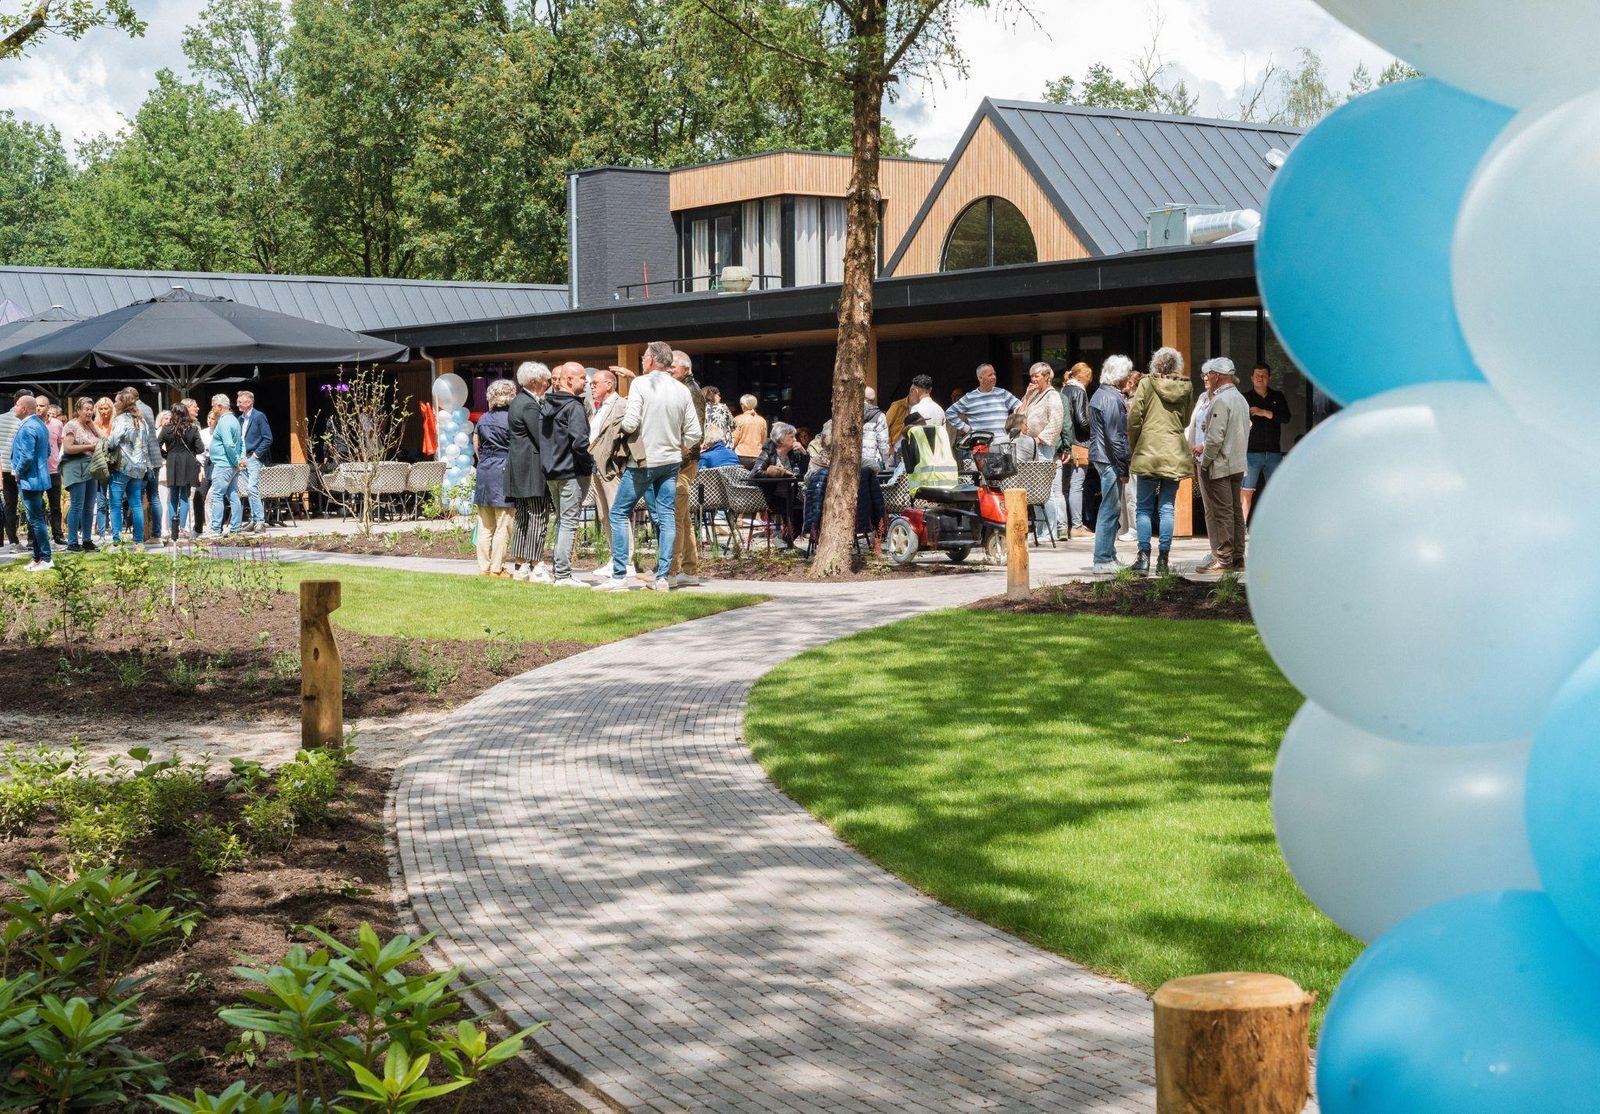 New holiday park Resort de Brabantse Kempen just opened